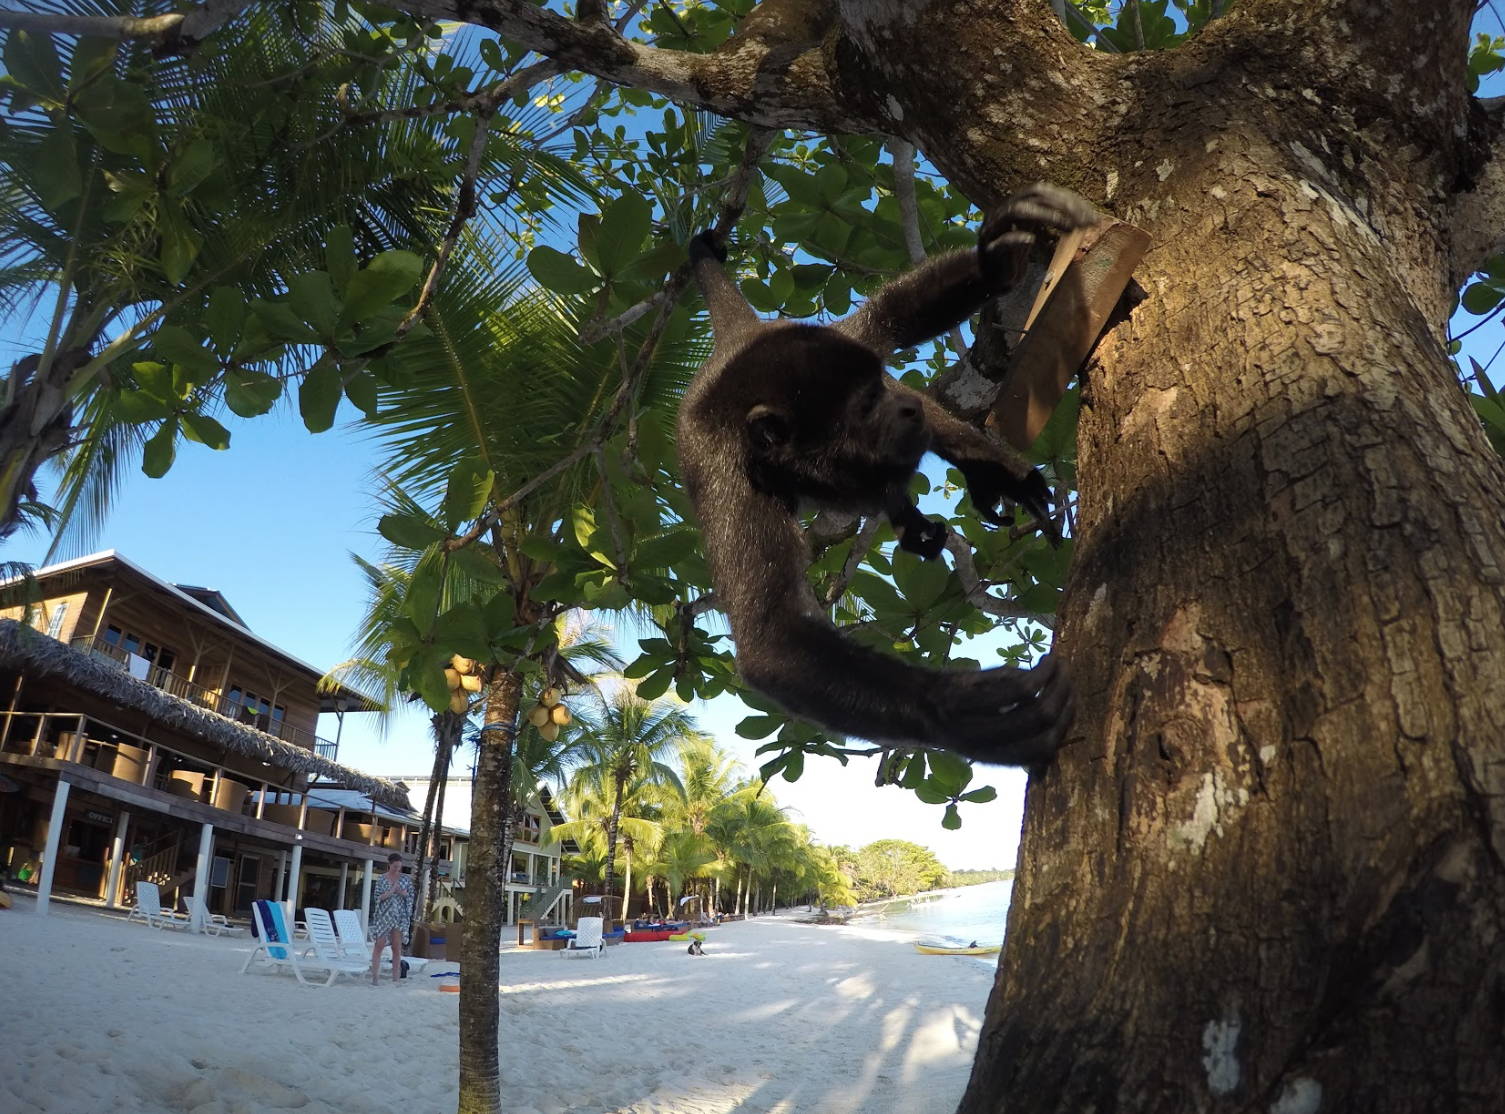 A monkey climbing a tree in Panama